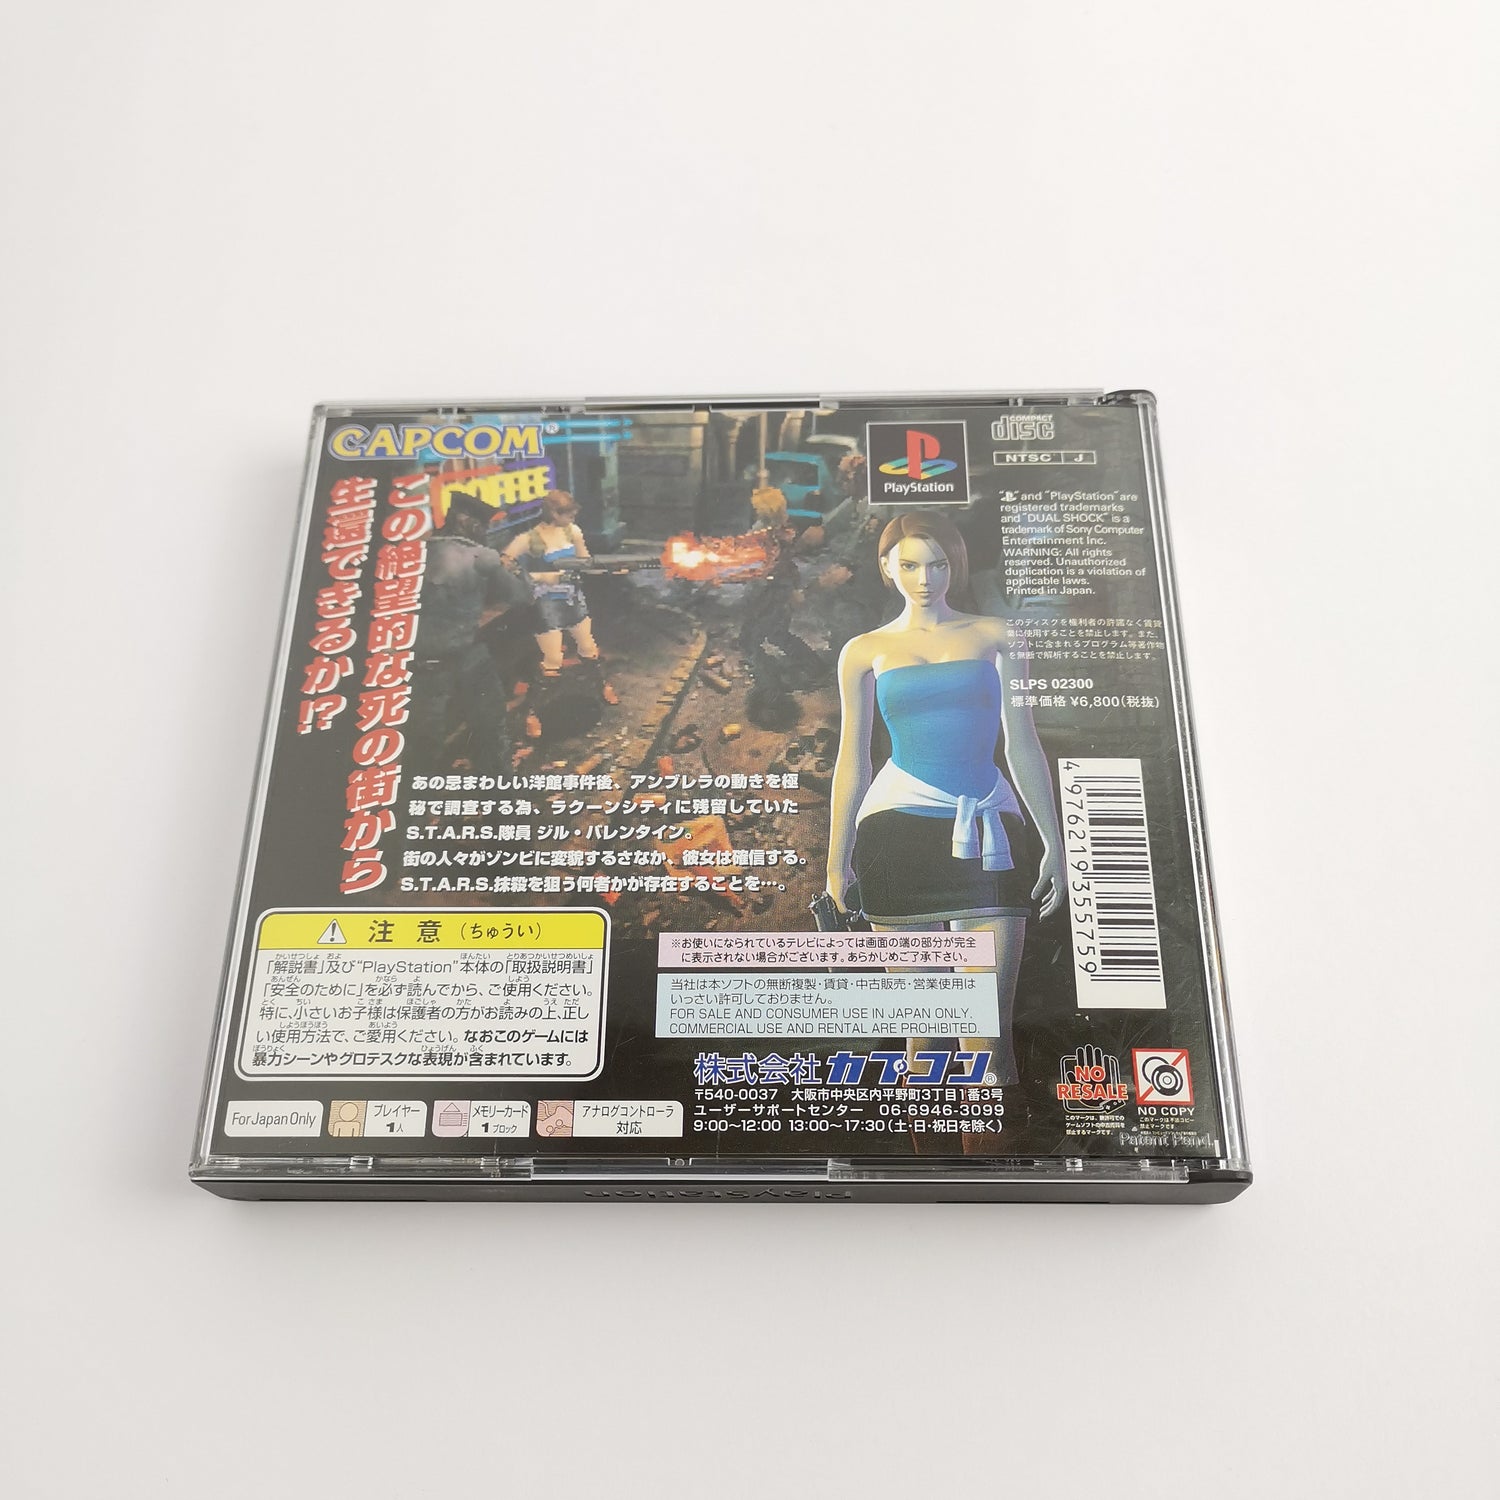 Sony Playstation 1 Spiel : Biohazard 3 Last Escape | PS1 PSX - OVP NTSC-J Japan